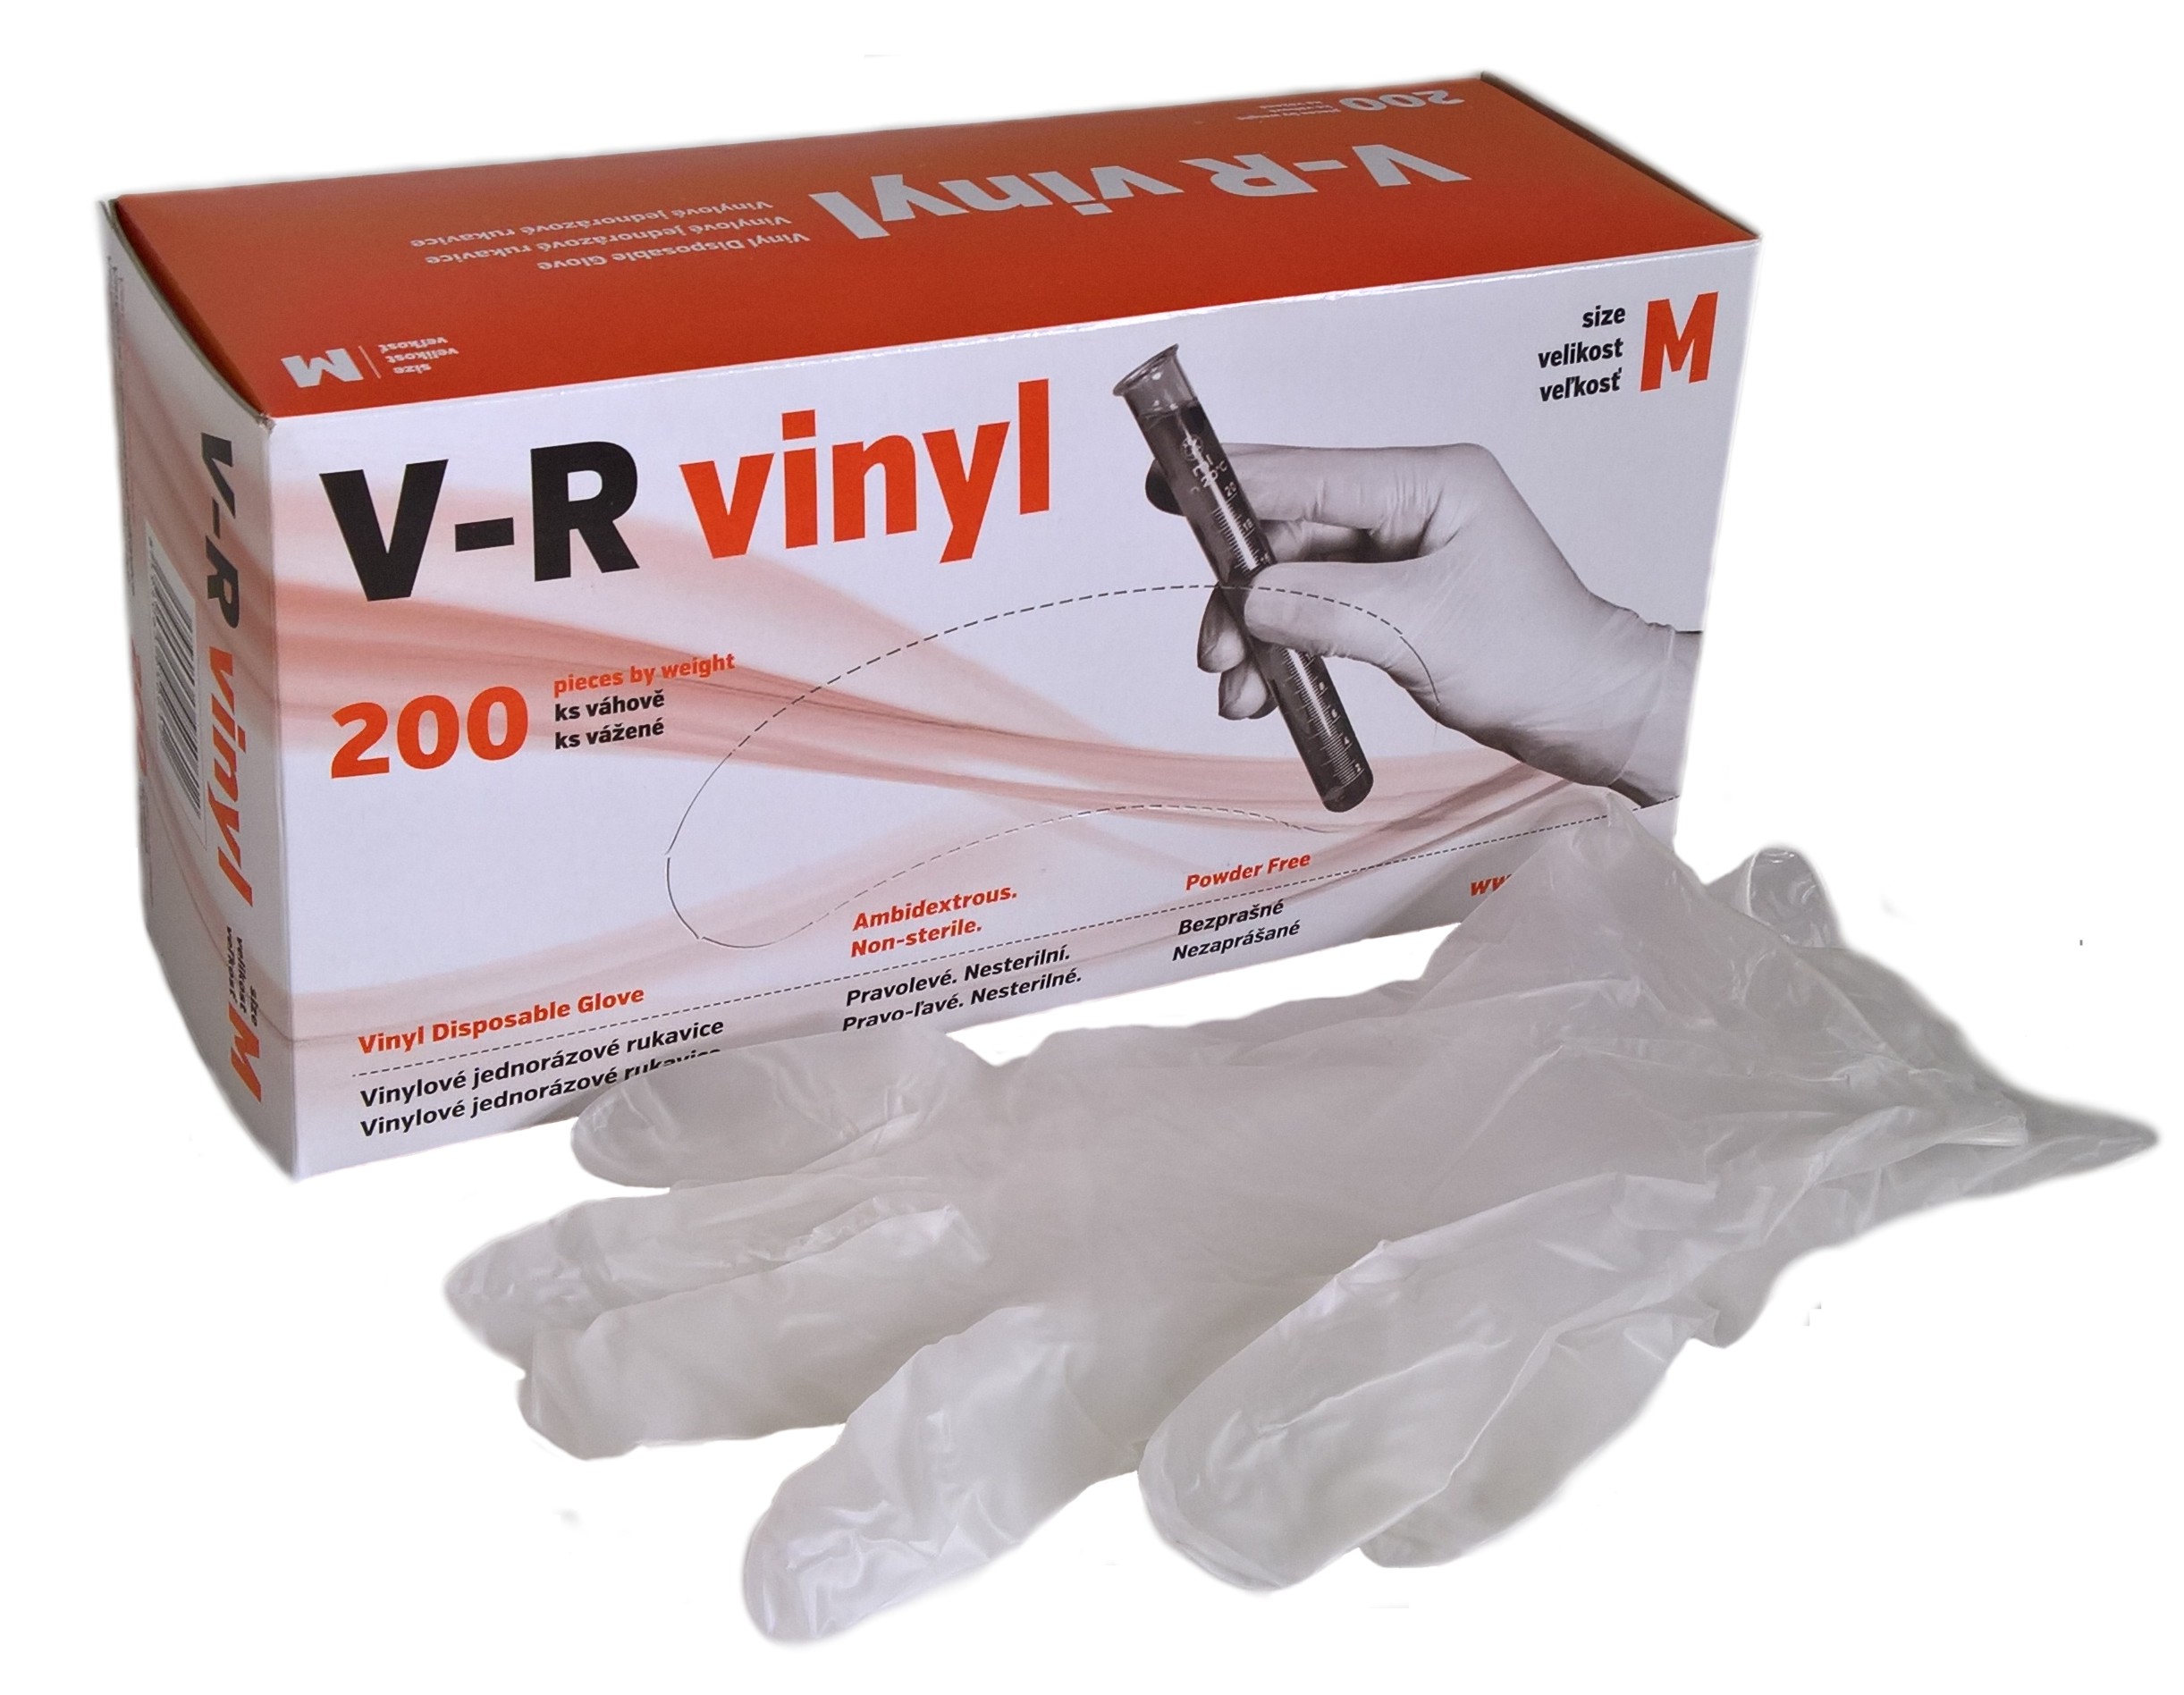 Vinylové jednorázové rukavice V-R bezprašné pravolevé